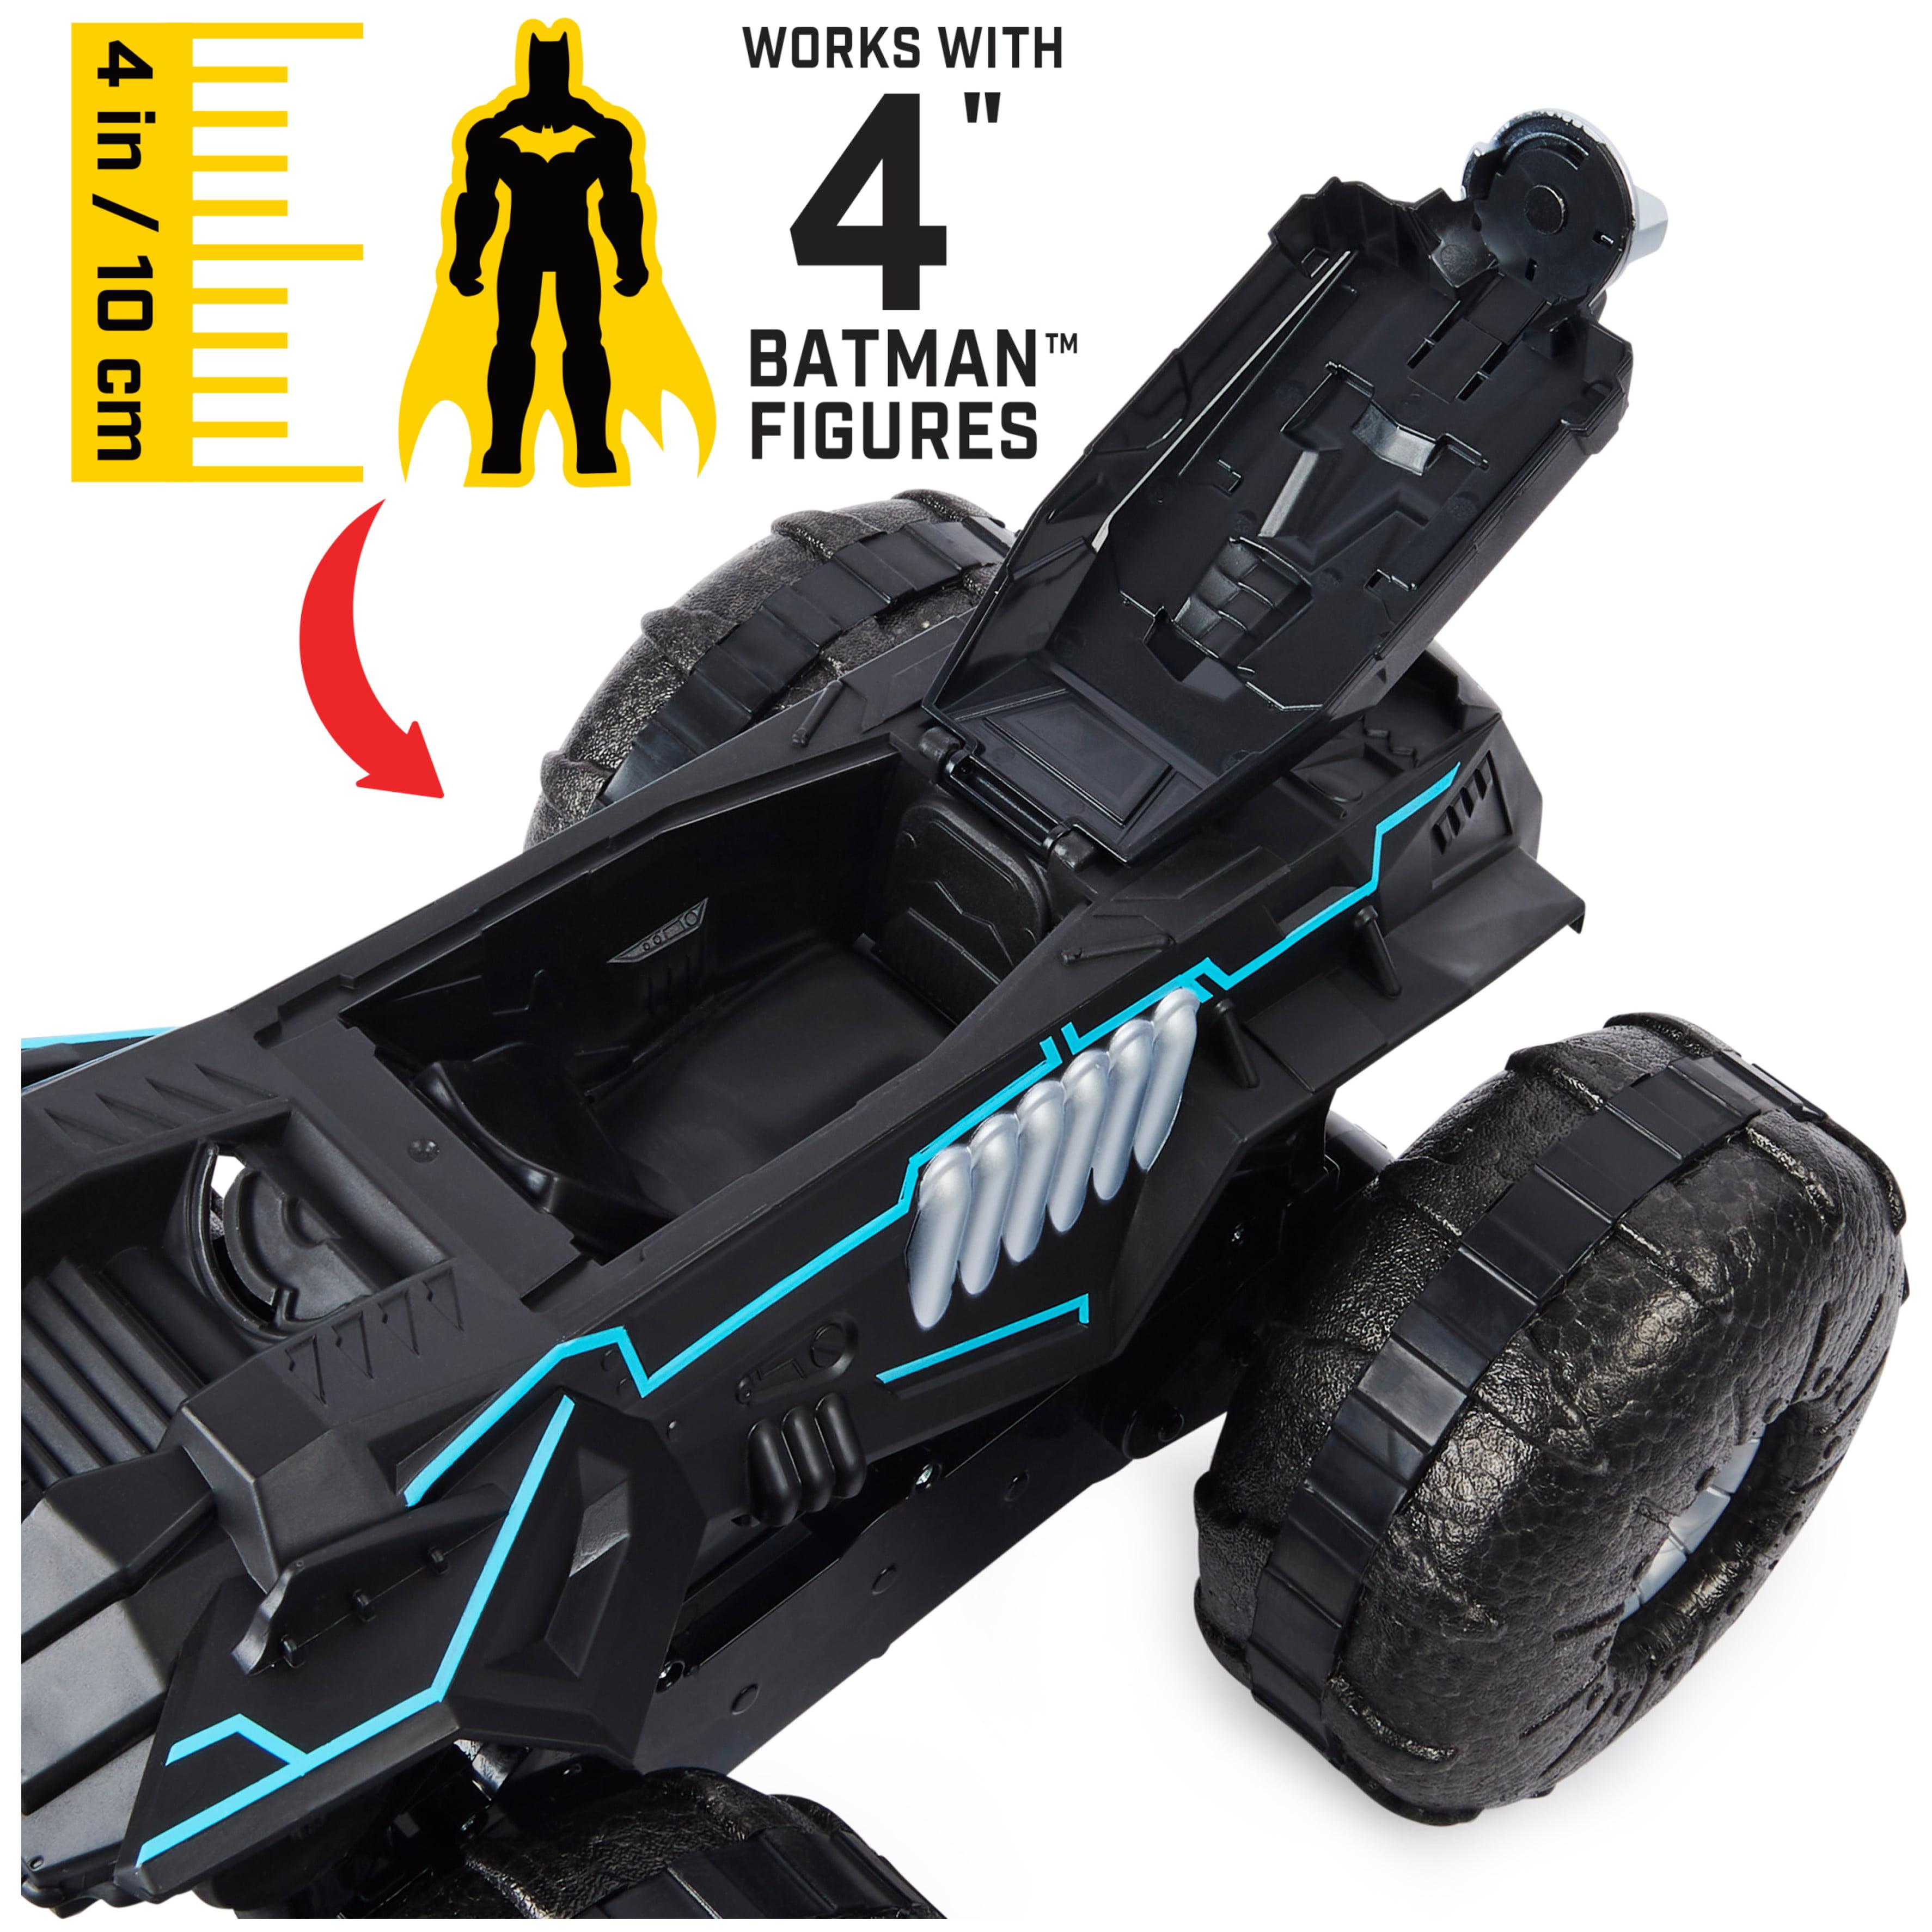 Batman All Terrain Rc Batmobile: Unleash Off-Road Adventures with the All-Terrain RC Batmobile